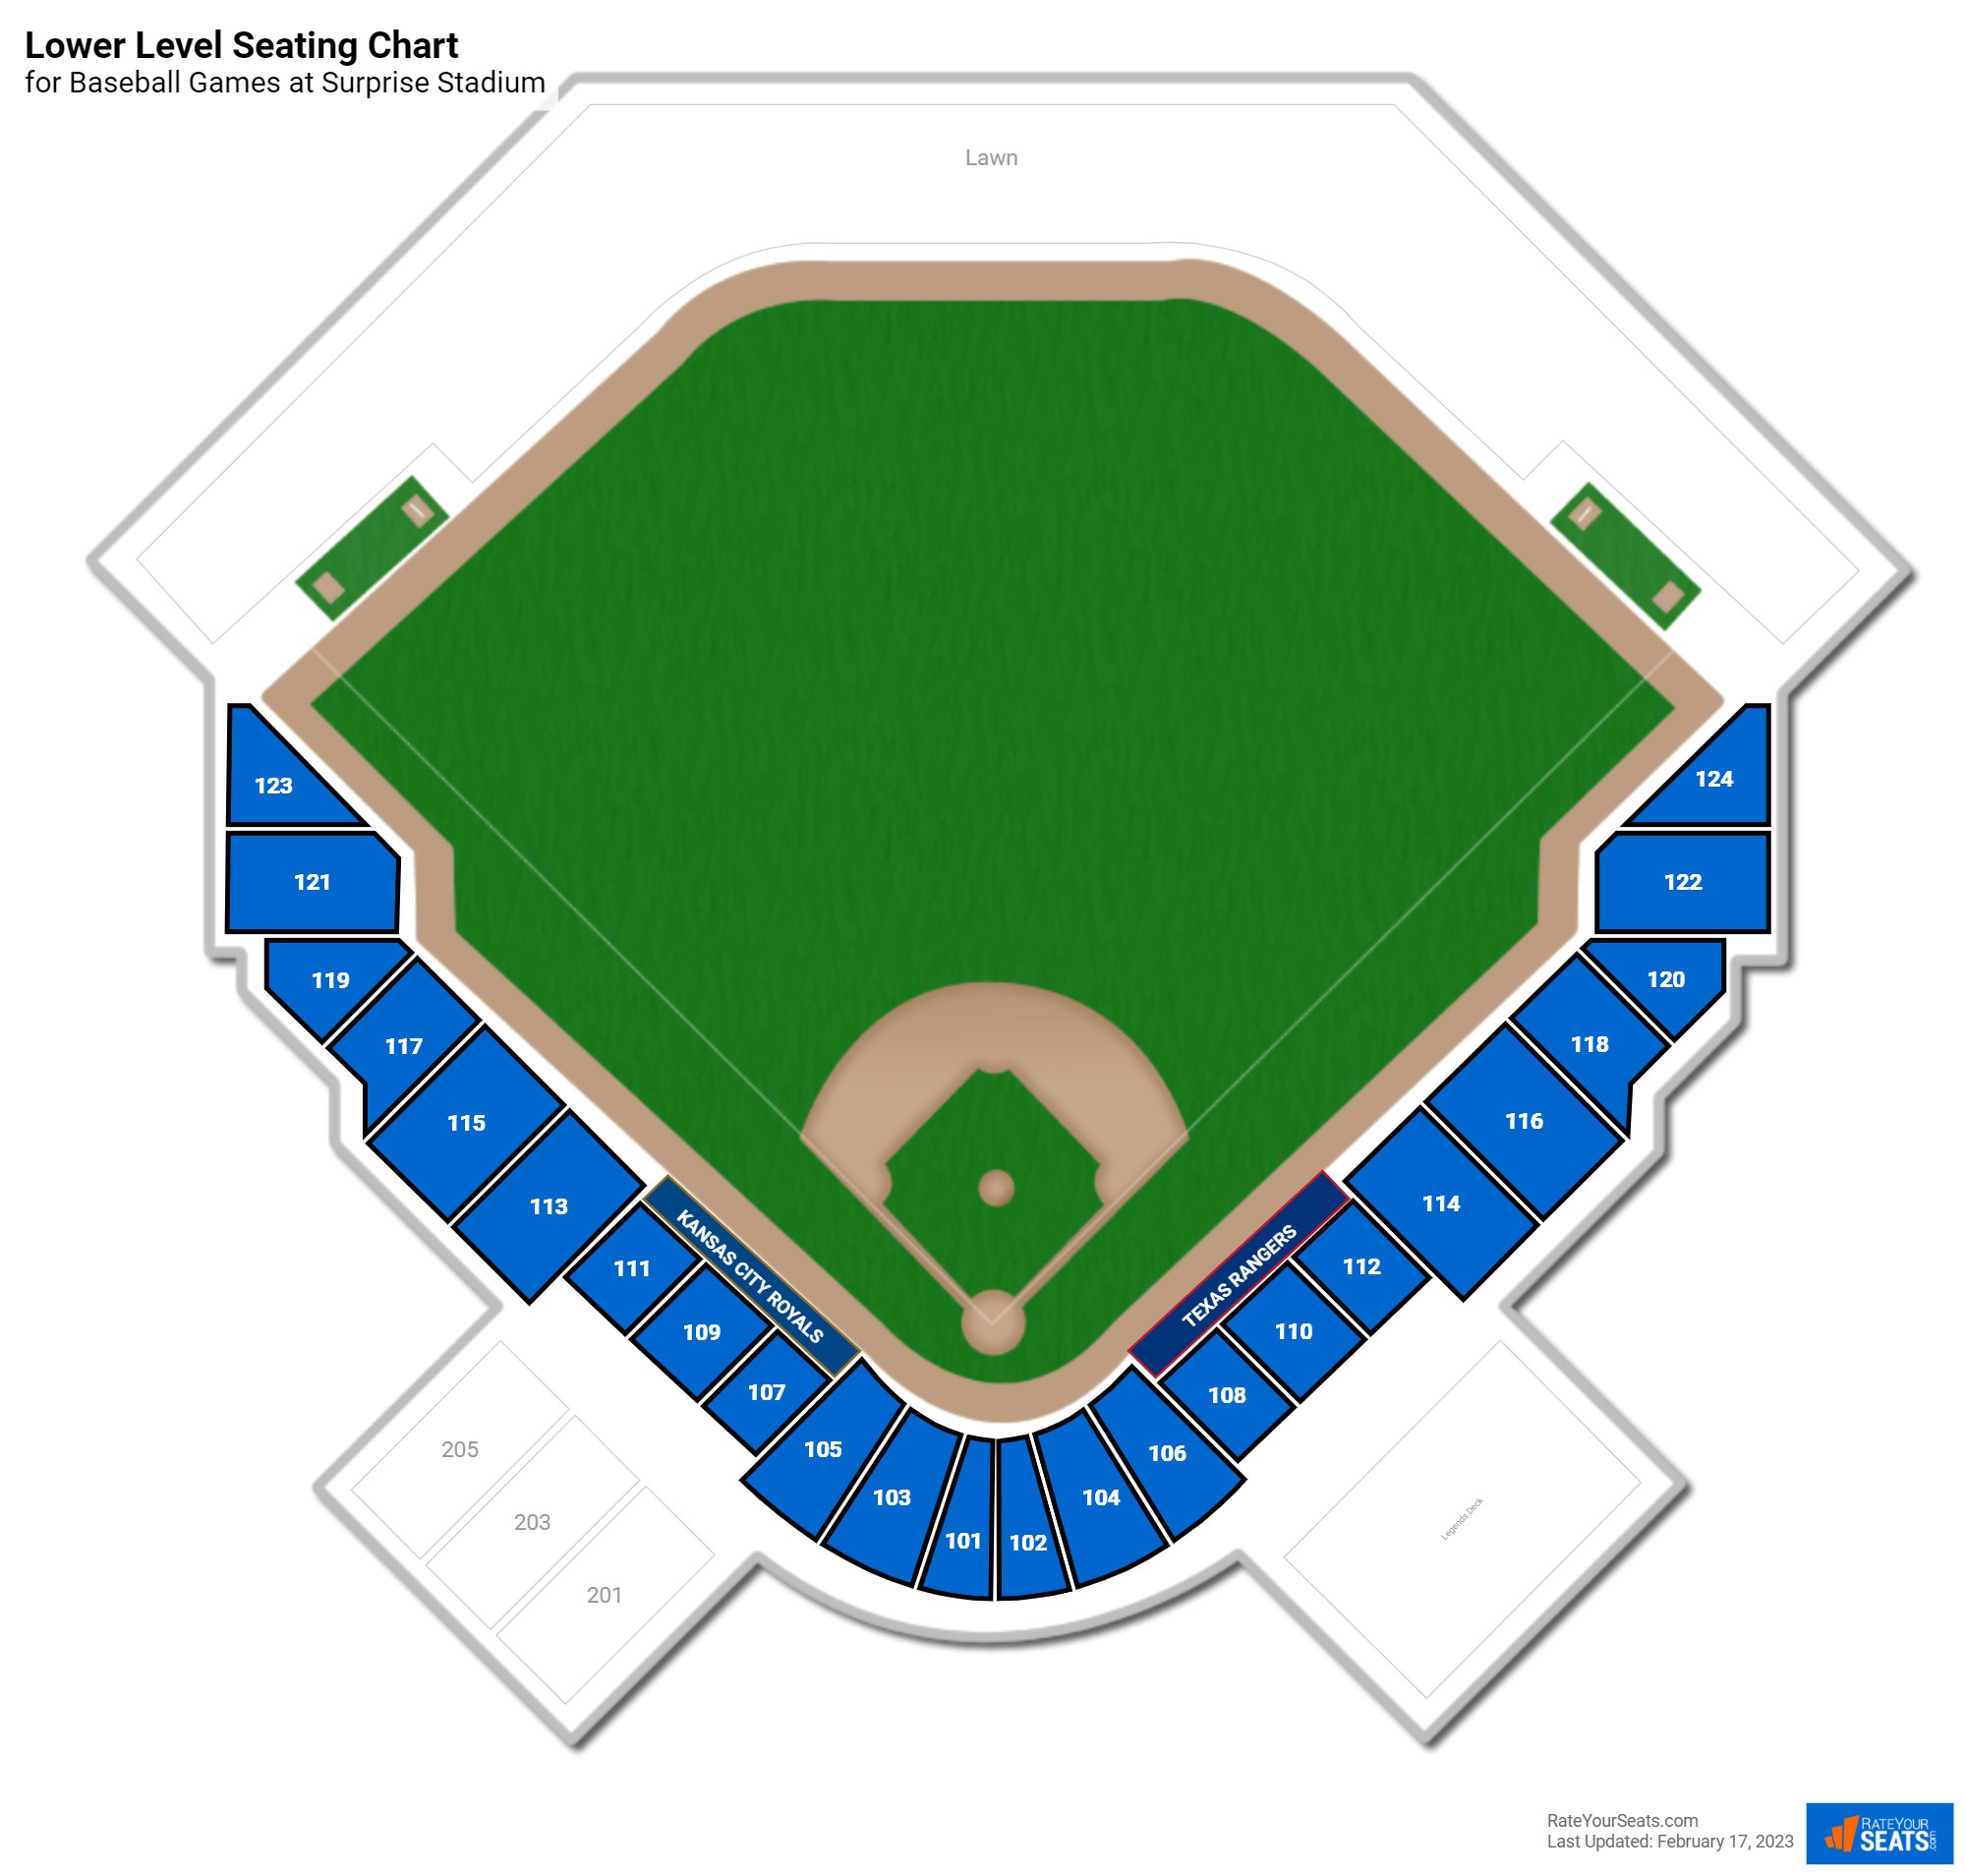 Baseball Lower Level Seating Chart at Surprise Stadium